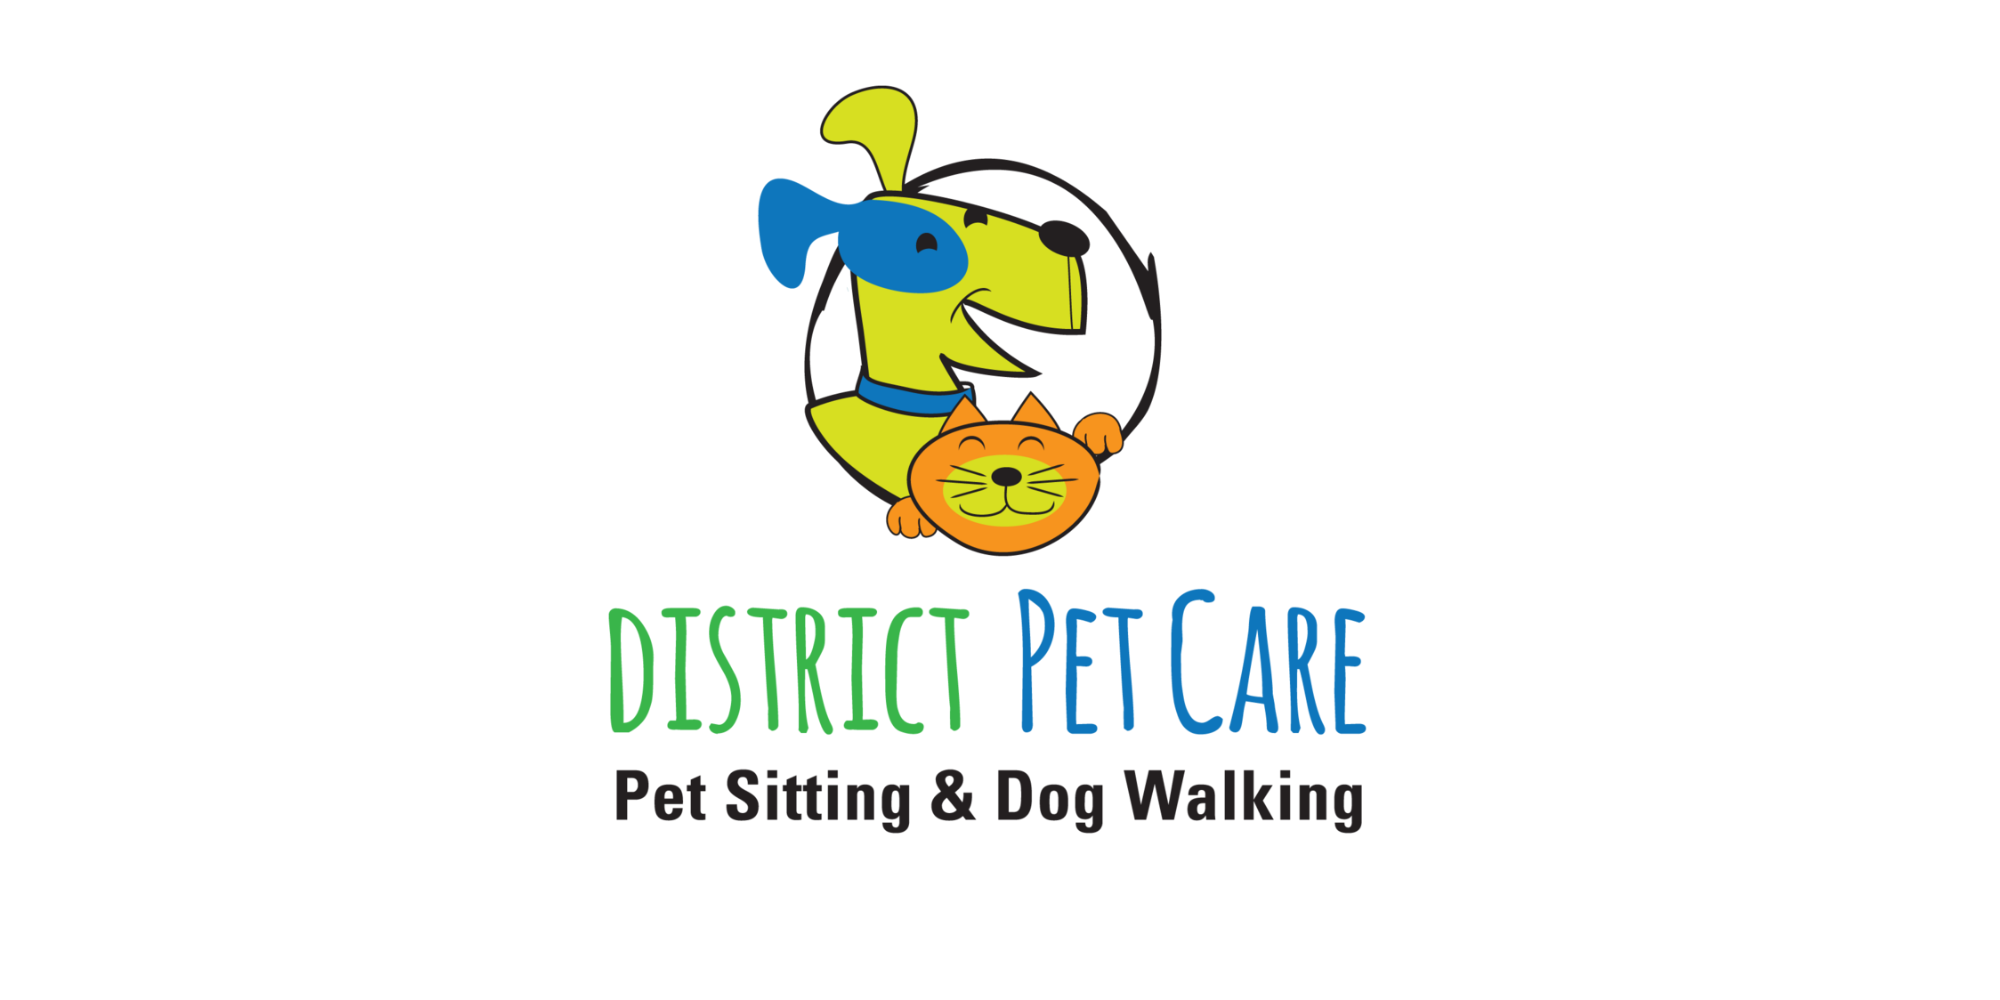 District-pet-care-logo